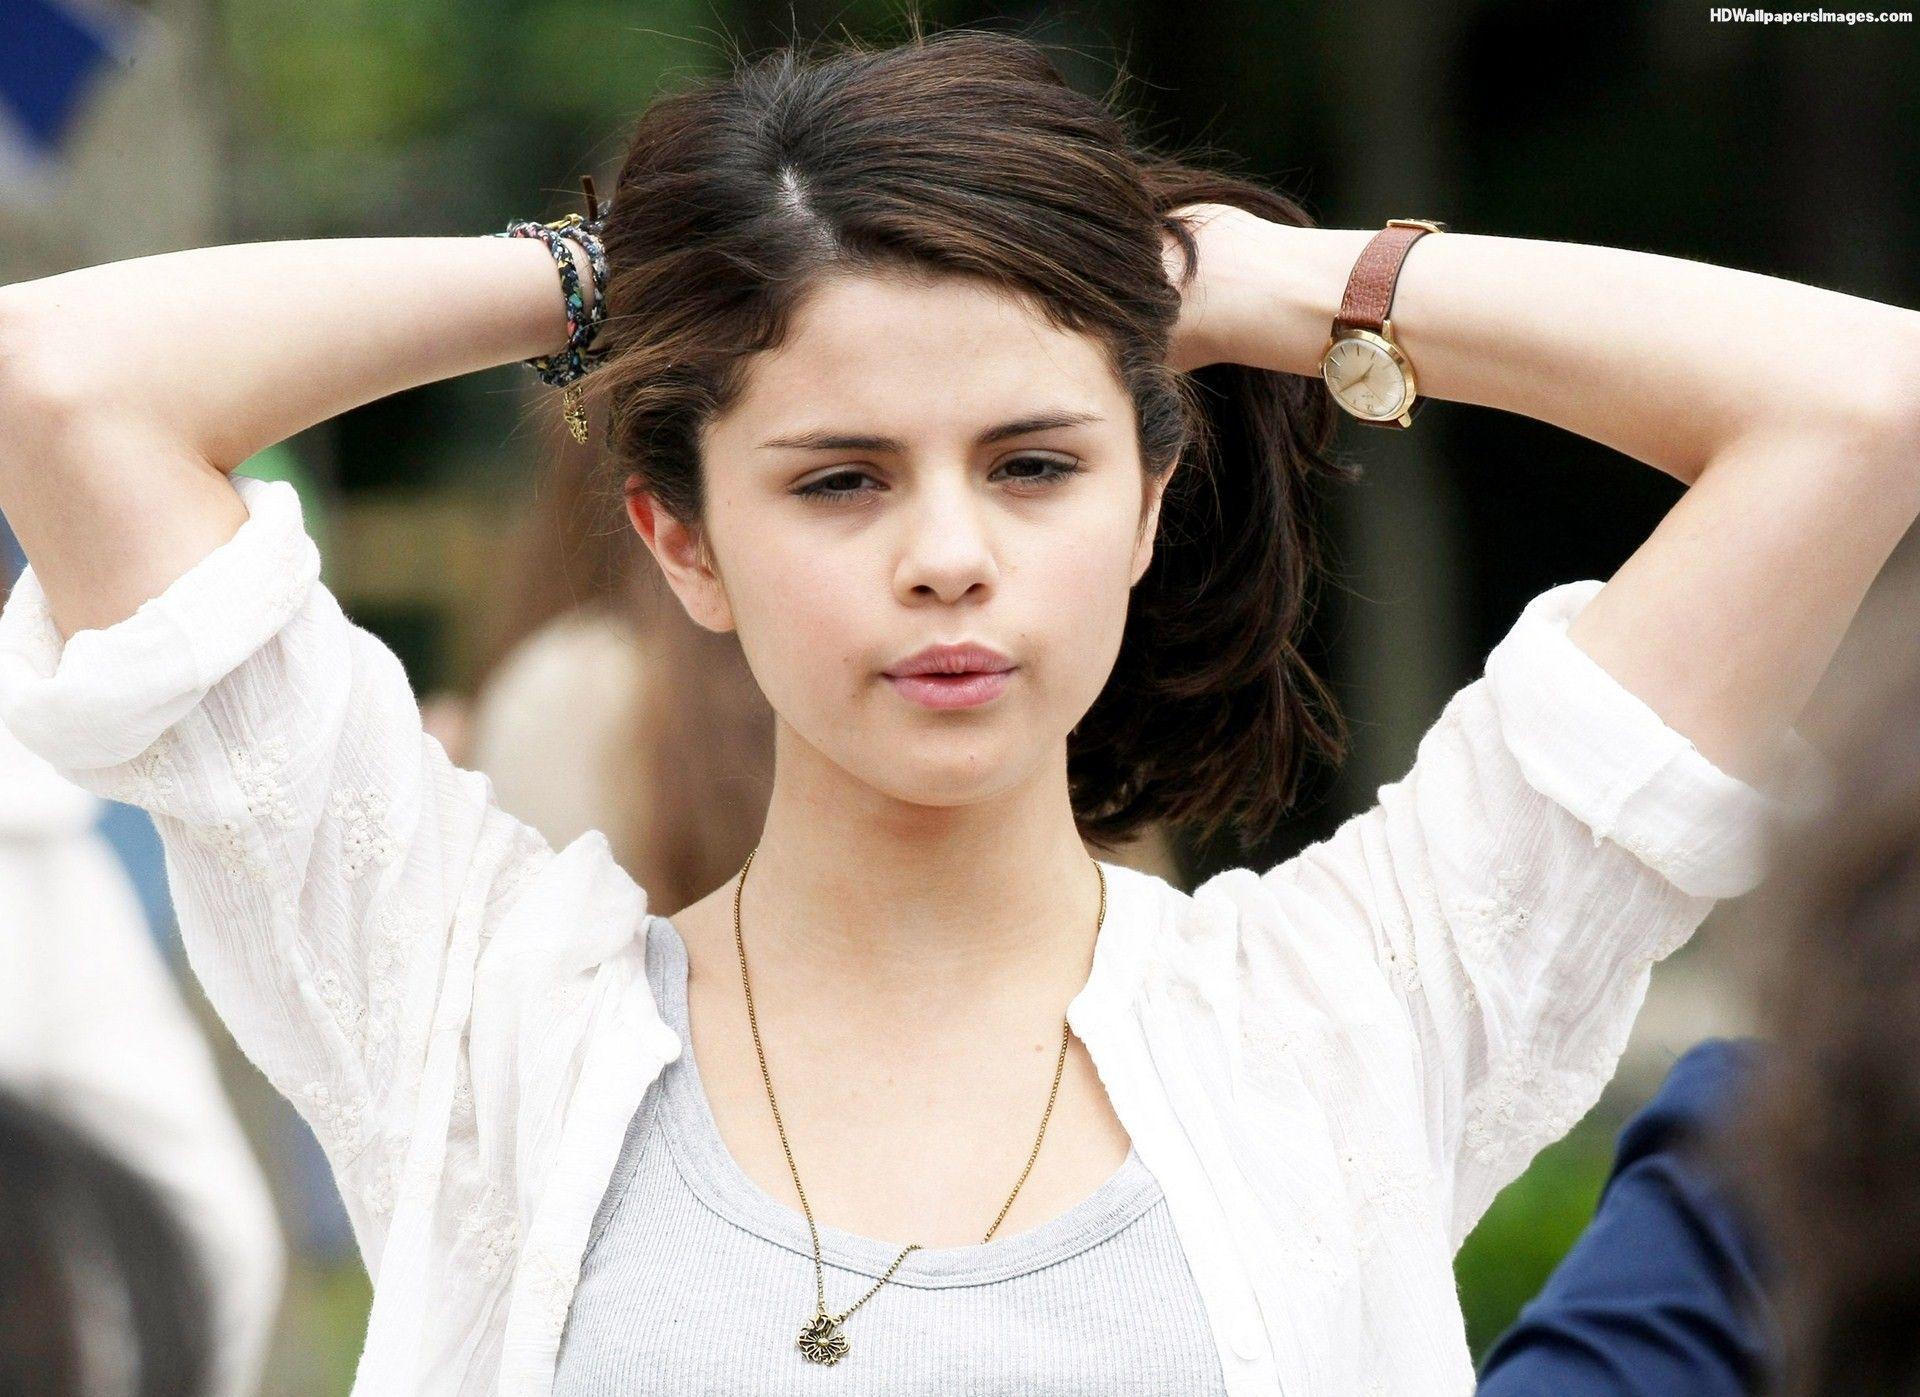 Selena Gomez Cute Image. HD Wallpaper Image